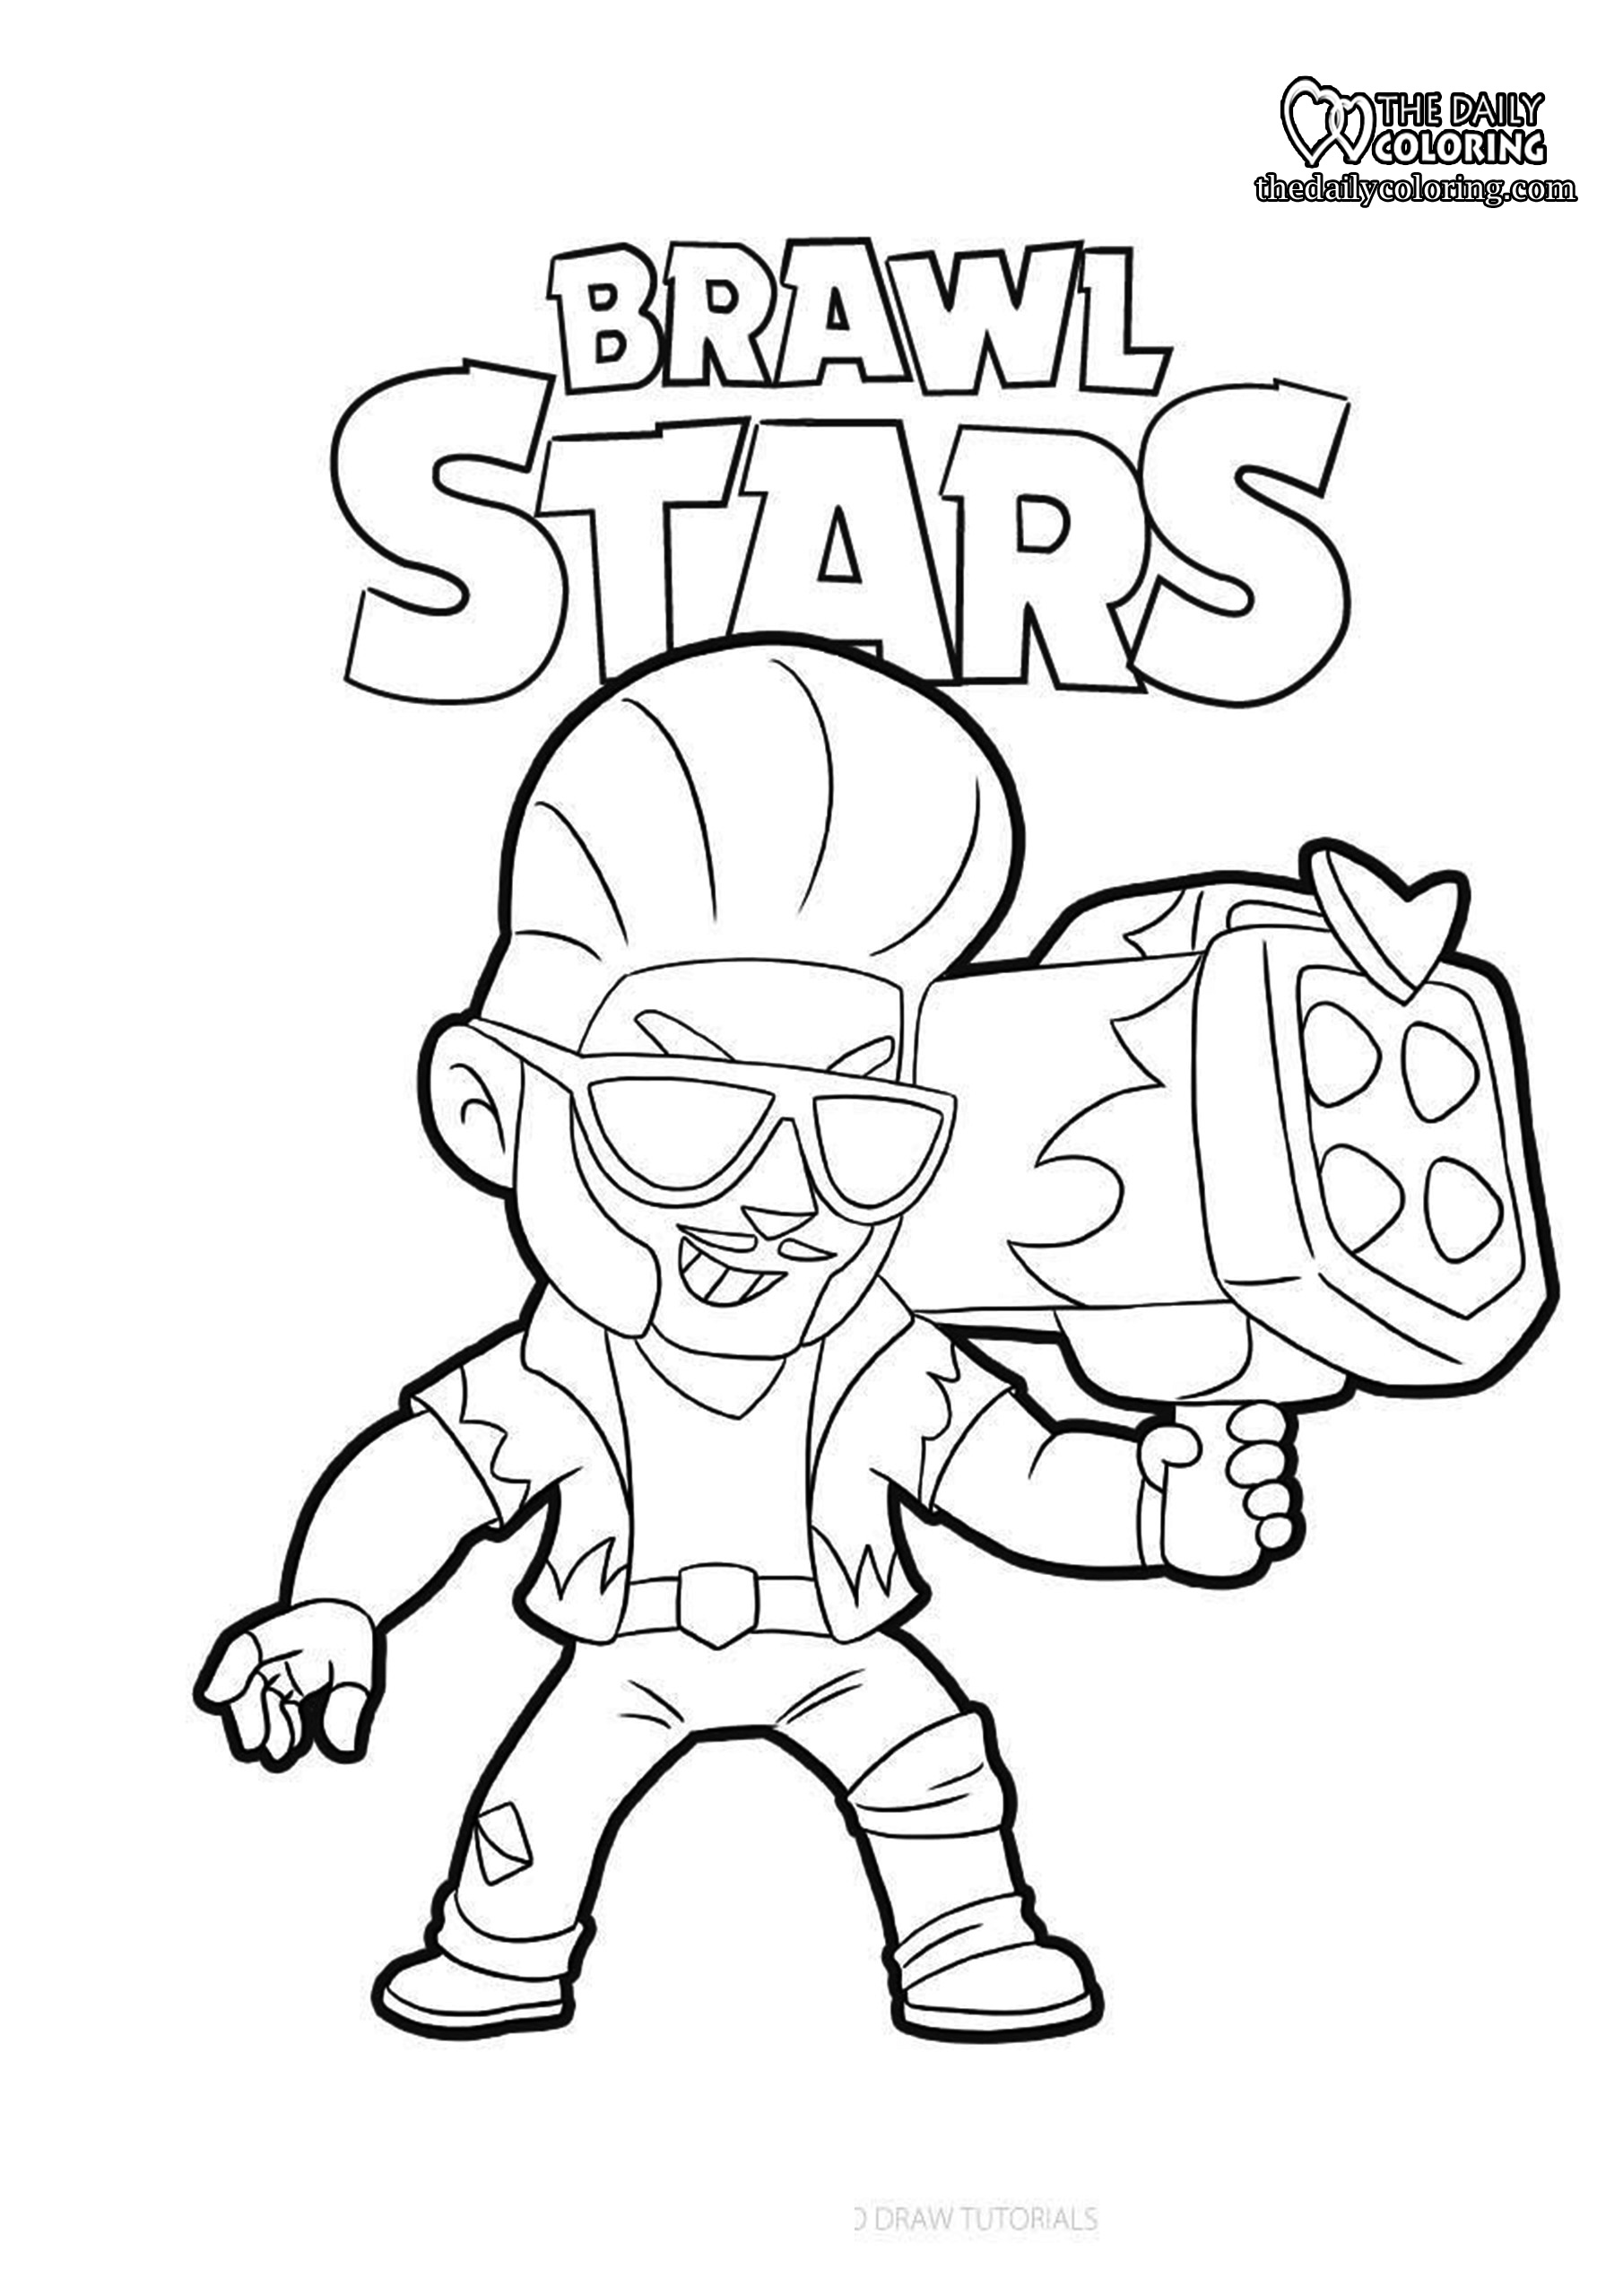 brawl-stars-coloring-page